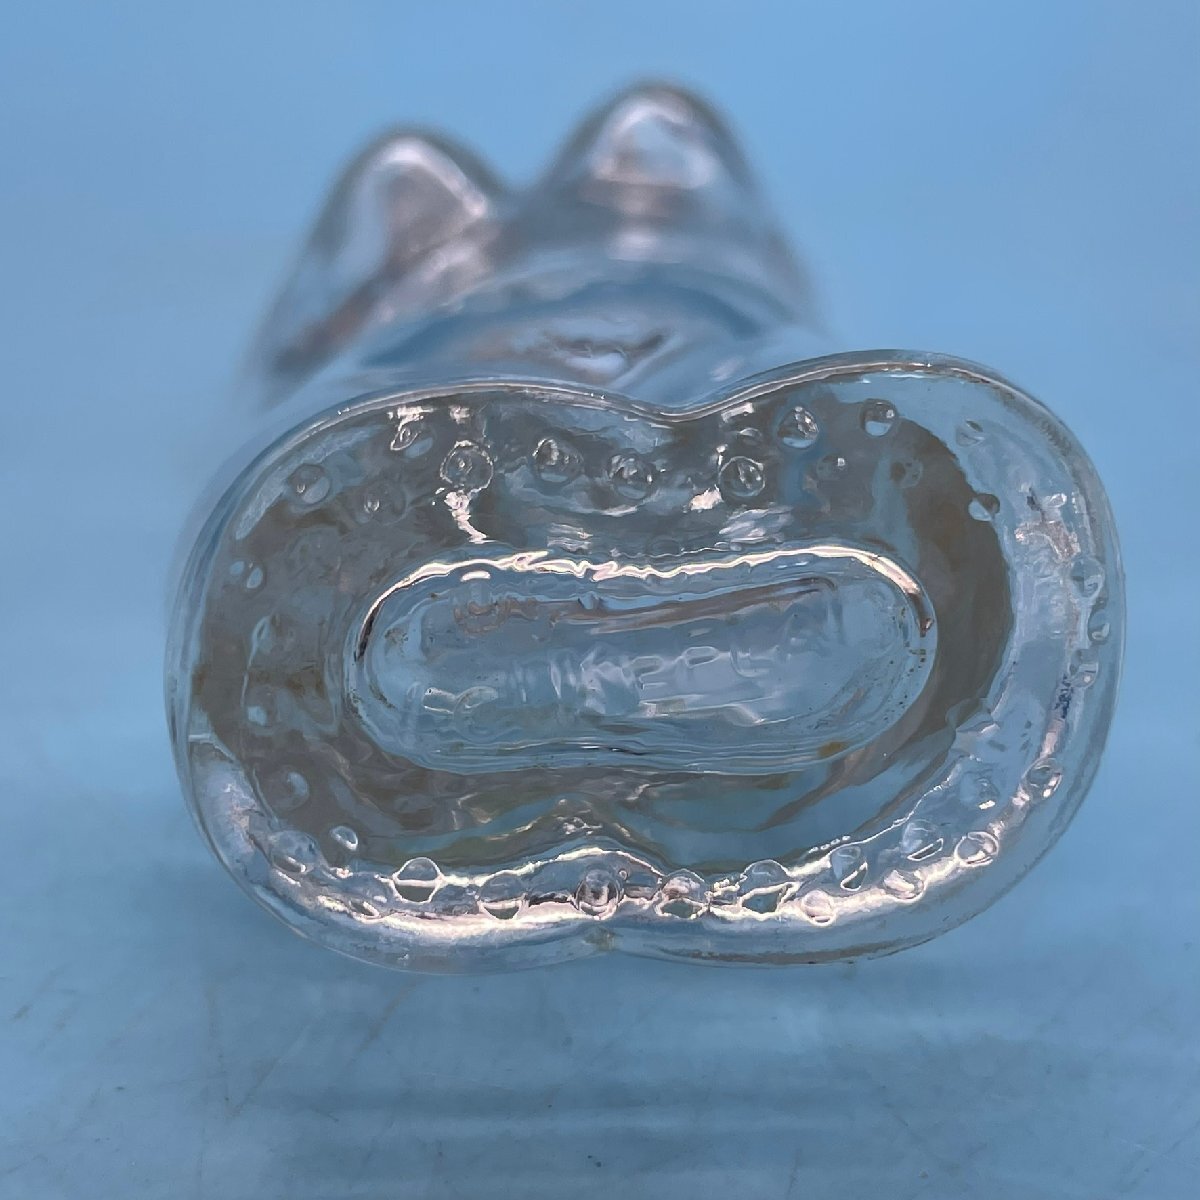 【10094O182】DEPOSE KEFLA トルソー型ガラス瓶 ガラス製 ボトル ケフラ 酒 空き瓶 小瓶 女性 ヌード エロ インテリア 飾り オブジェ 置物の画像7